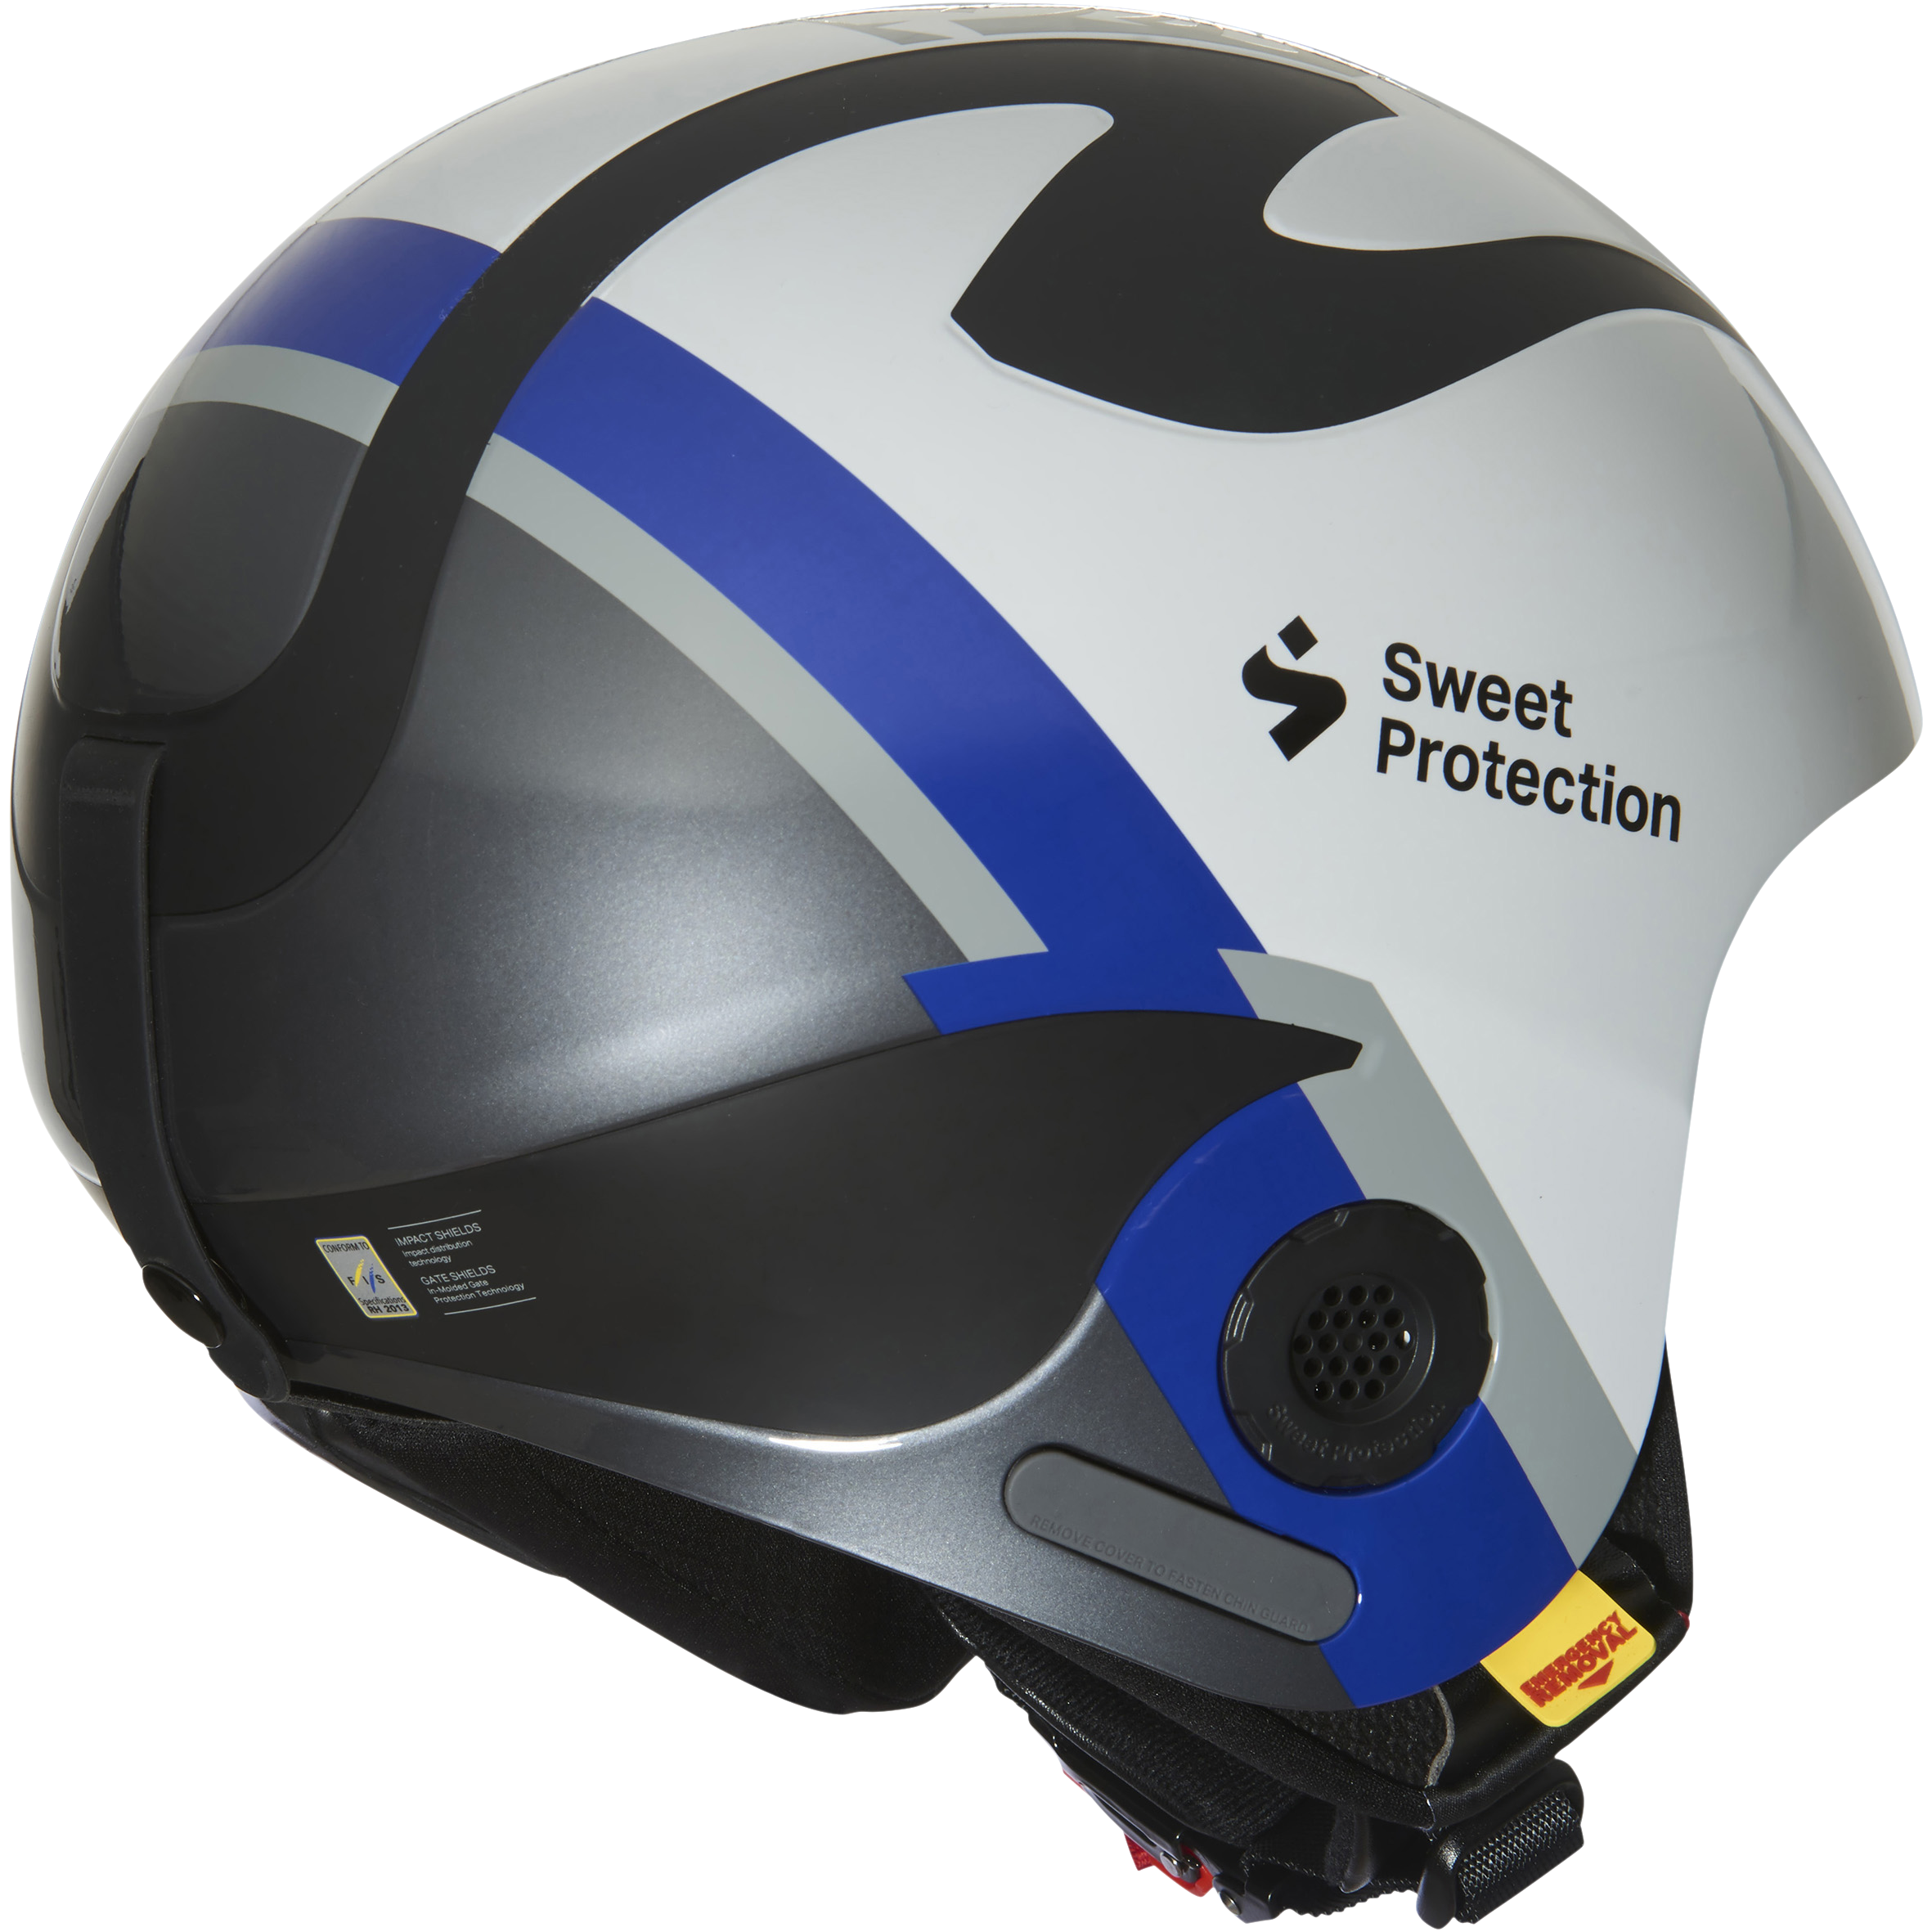 Volata Mips Team Edition Helmet